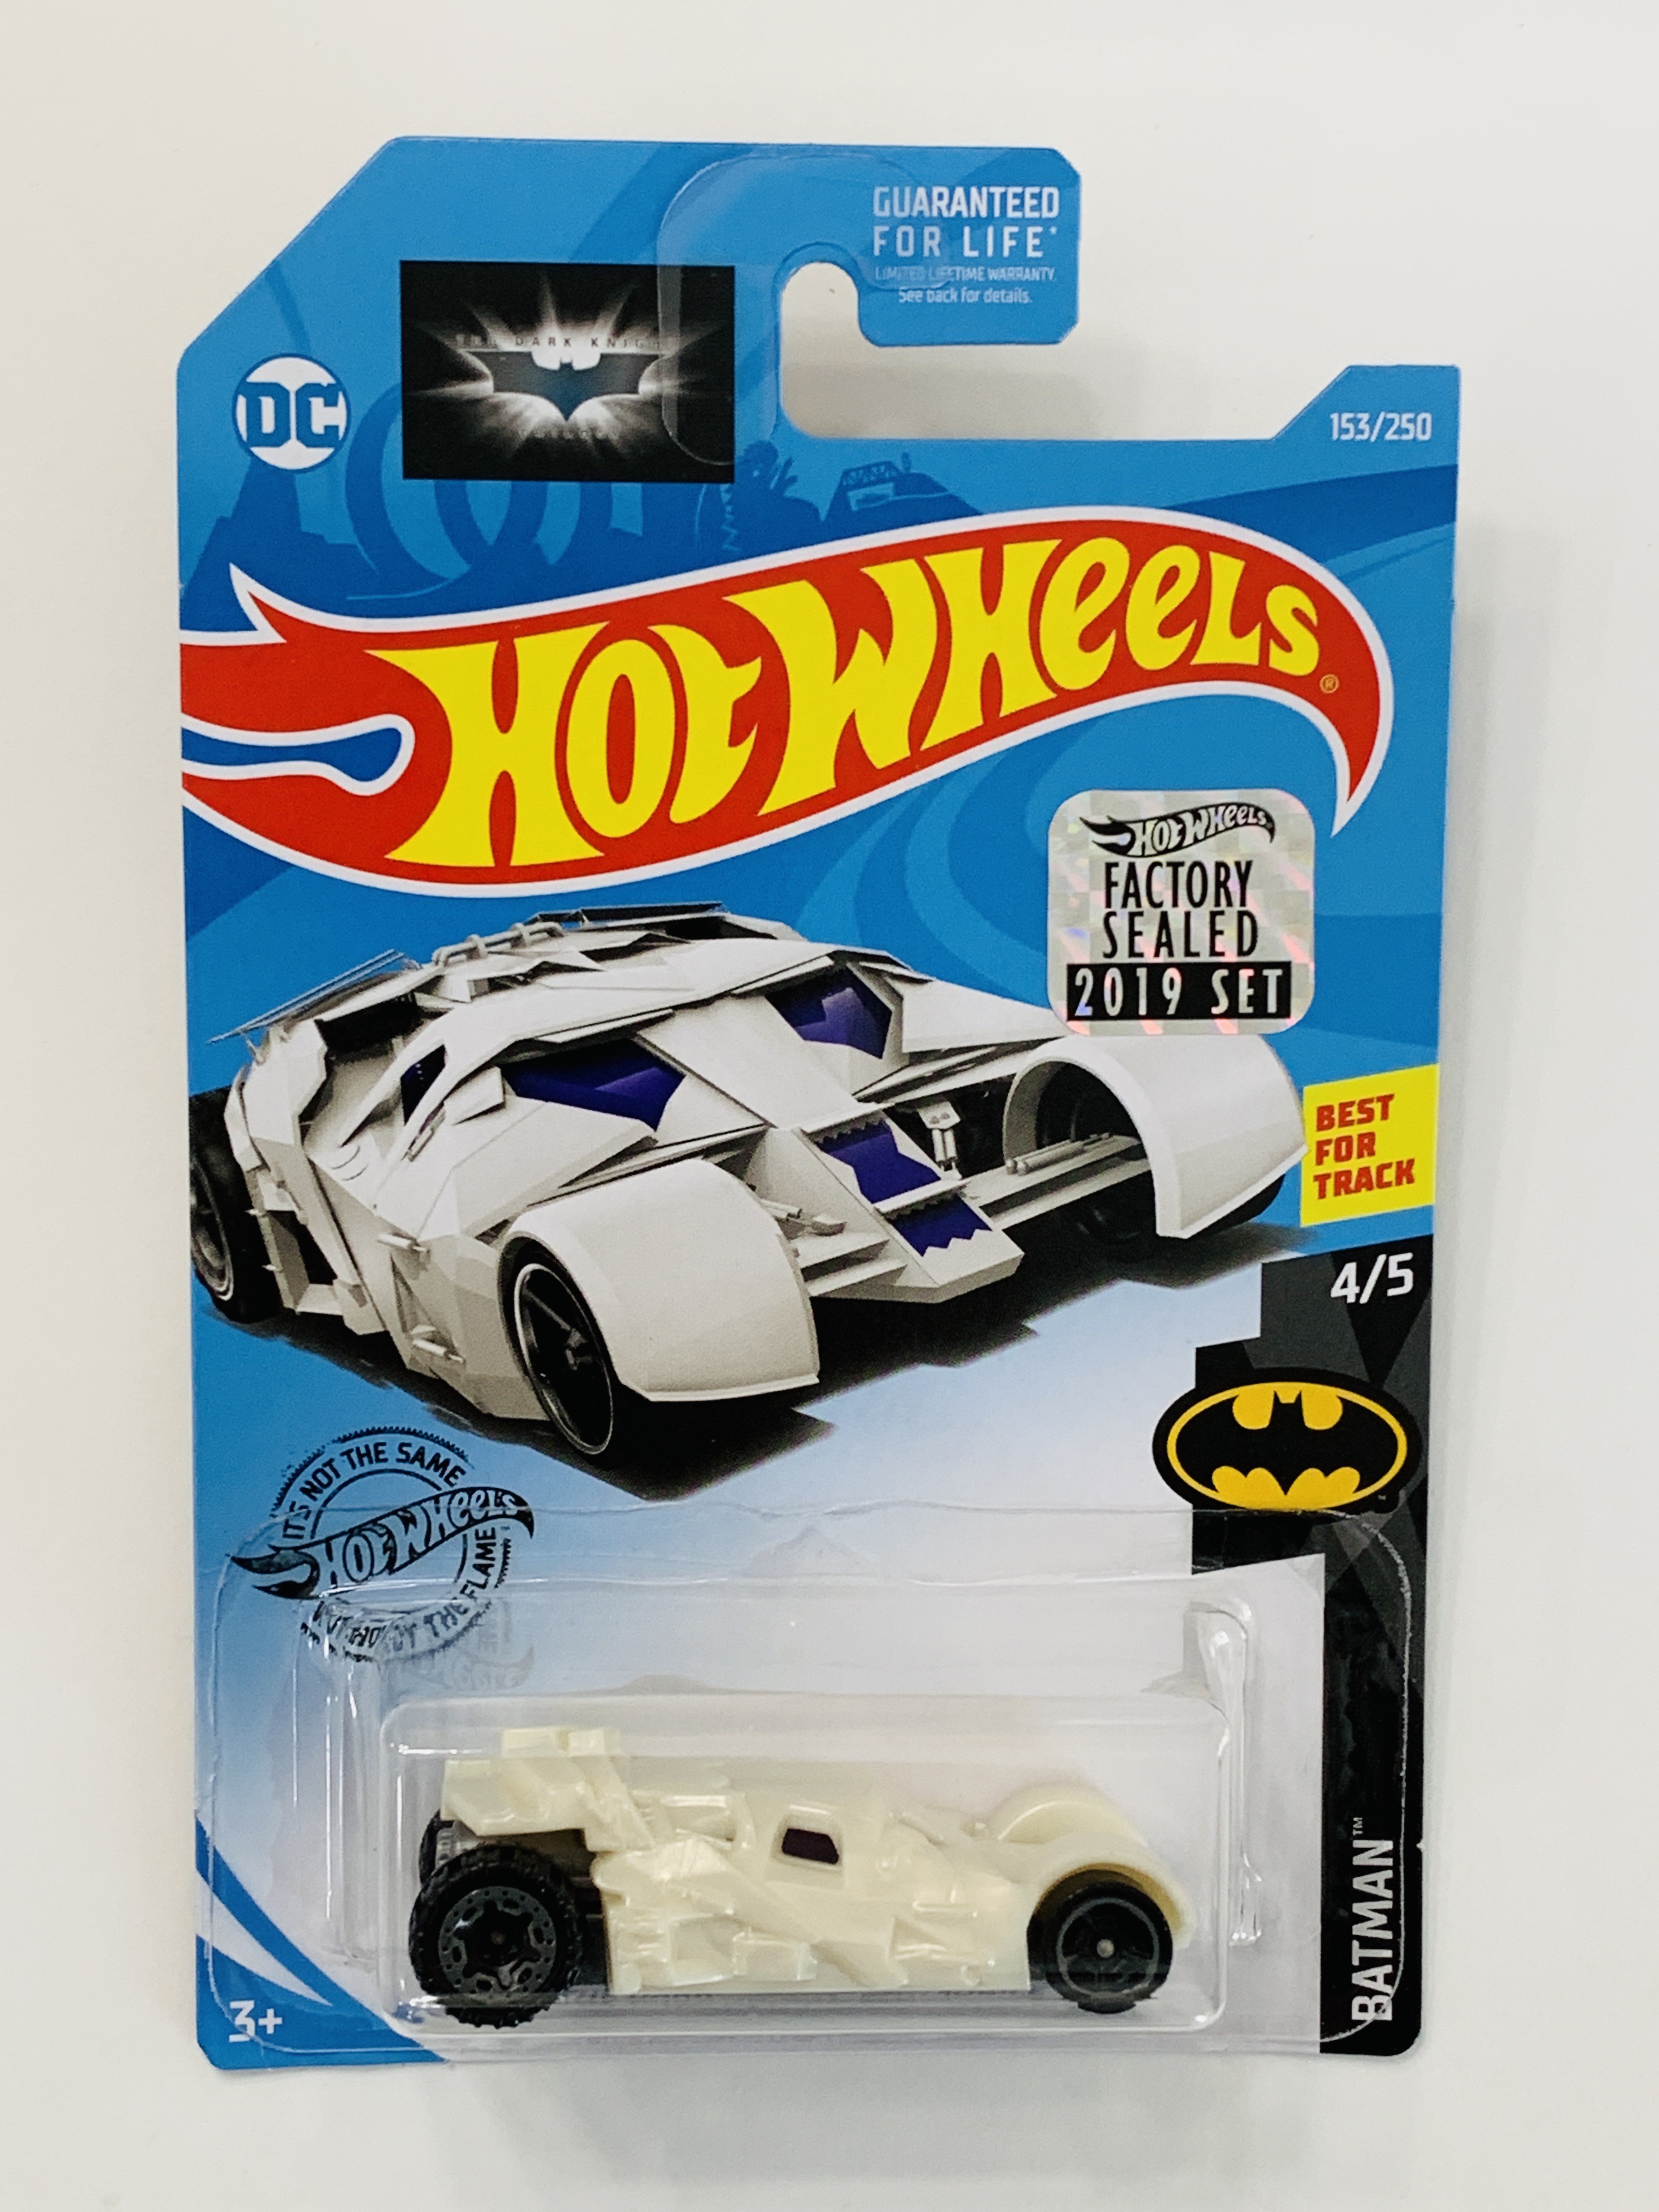 Hot Wheels 2019 Factory Set #153 The Dark Knight Batmobile